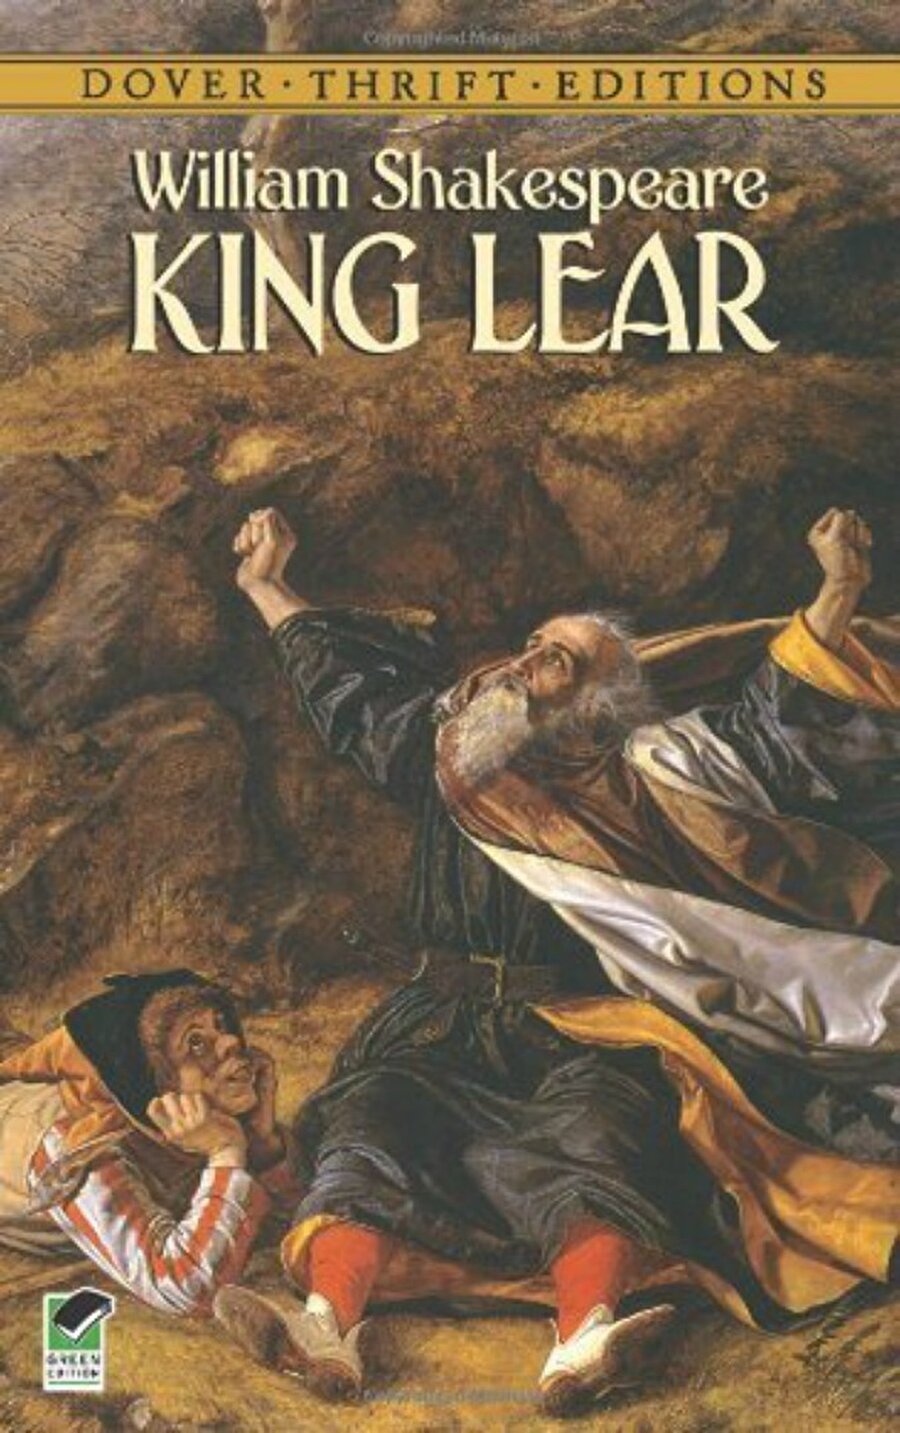 King Lear (Kral Lear) – William Shakespeare
